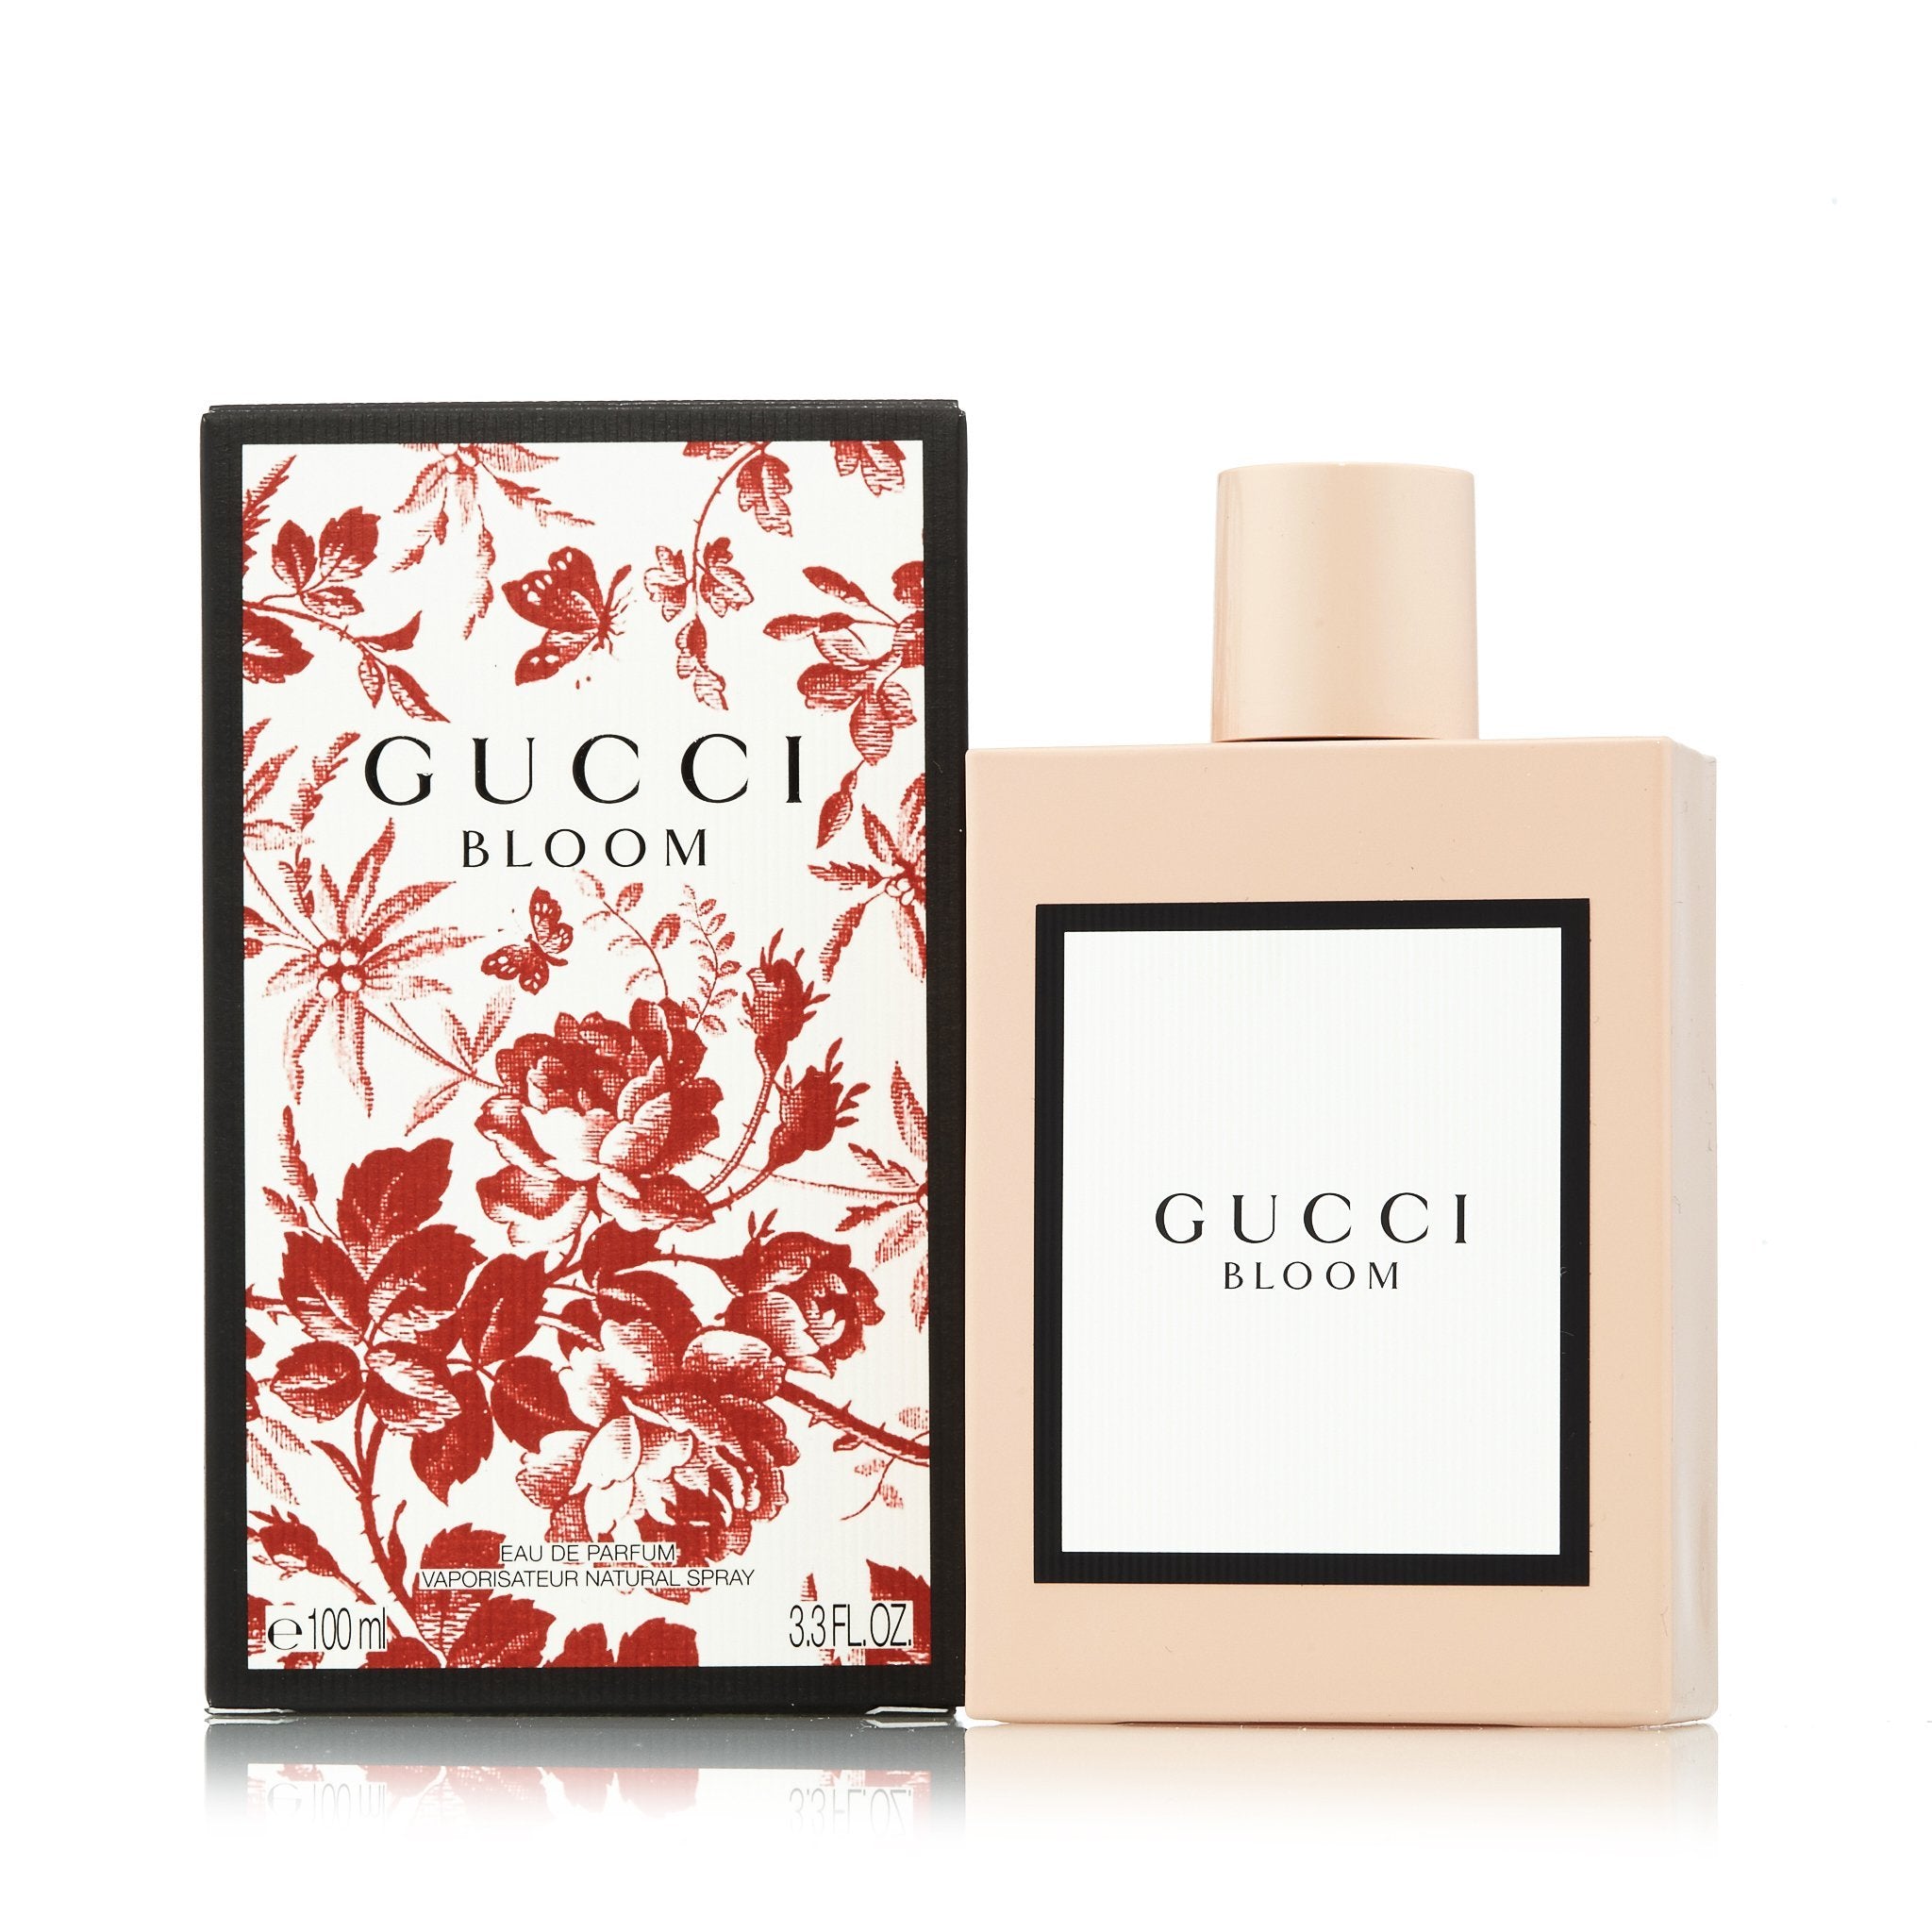 Fragrance By Gucci Market For Parfum Spray – Bloom De Eau Gucci Women